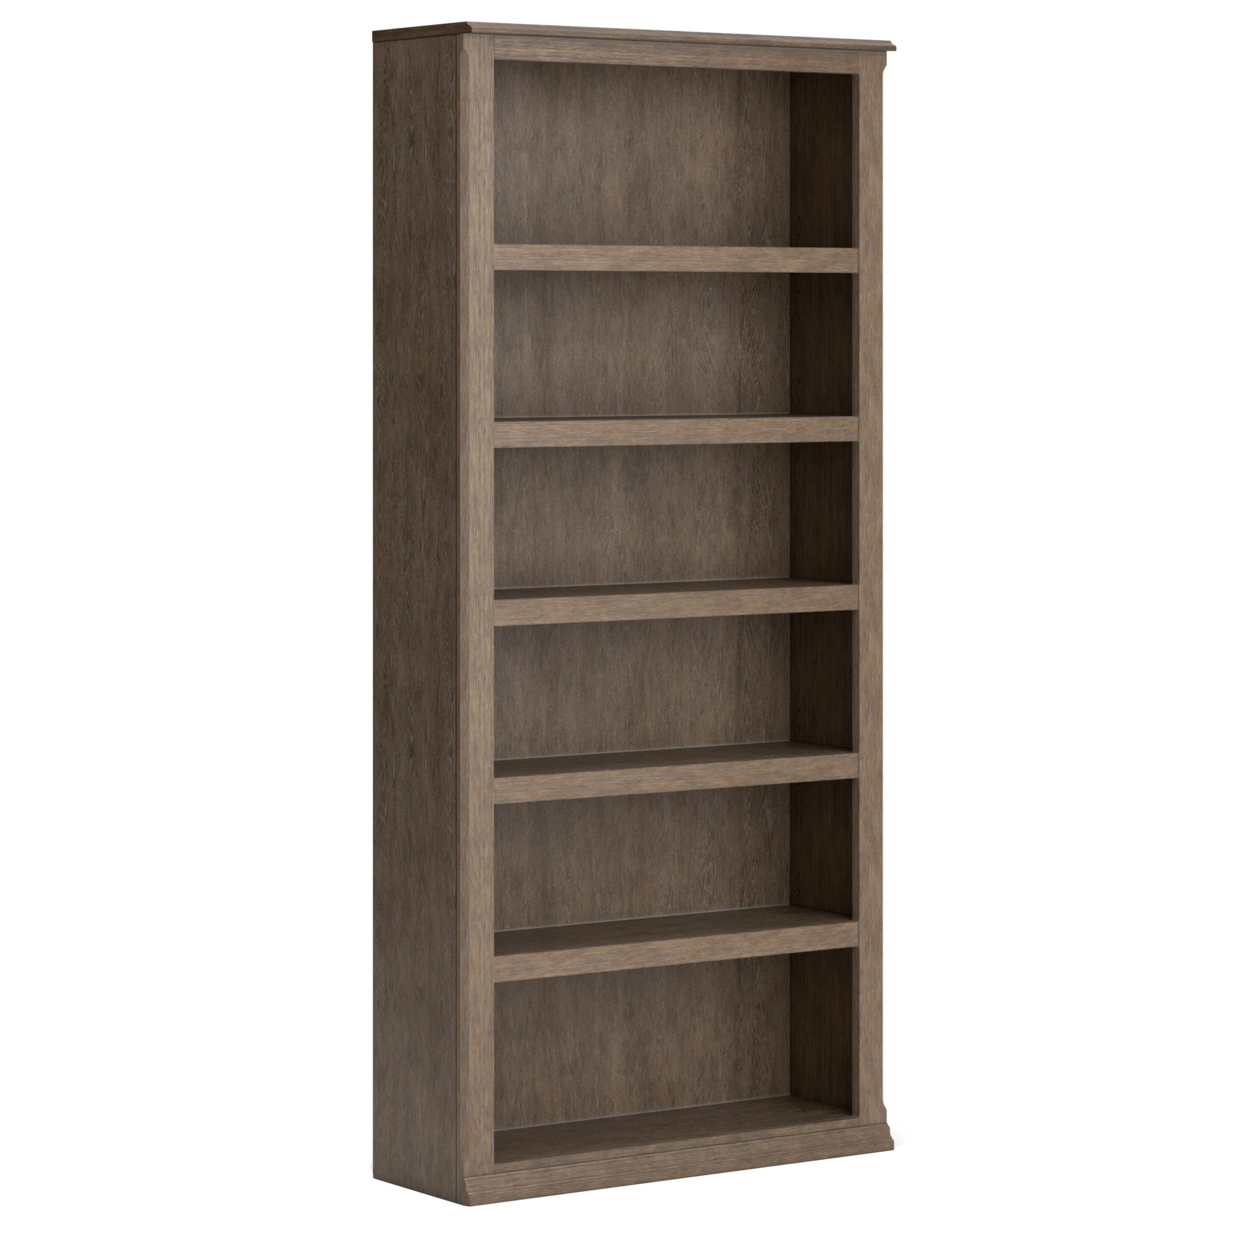 75 Inch Freestanding Bookcase, Adjustable Shelves, Wire Brushed Light Brown- Saltoro Sherpi